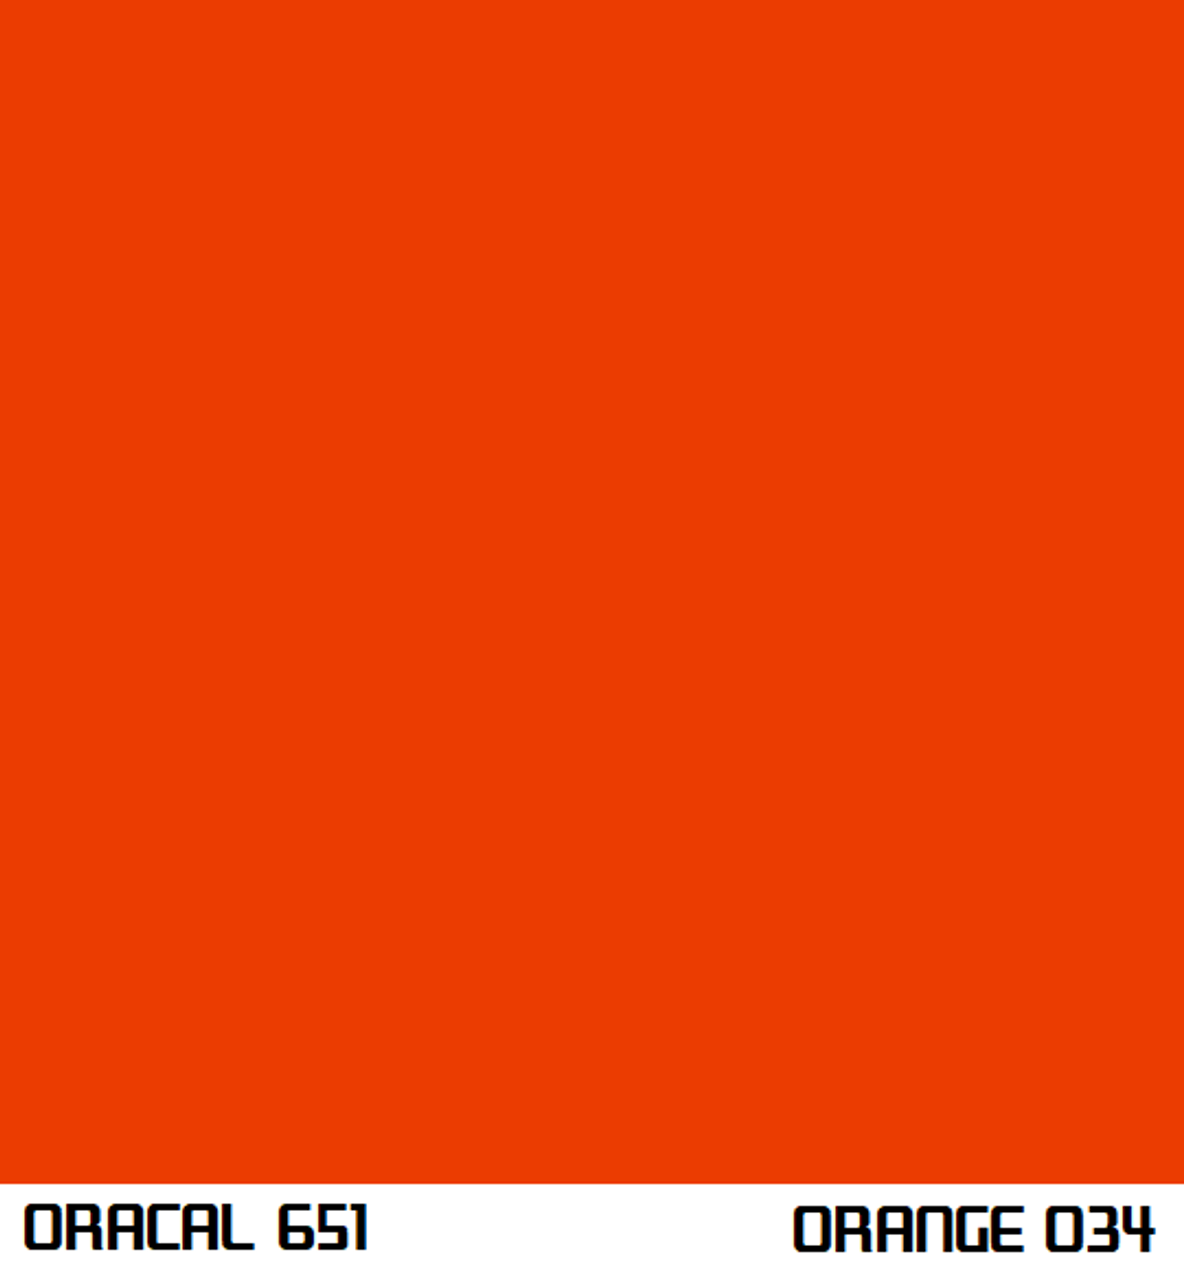 Oracal 651 Permanent Adhesive Vinyl Gloss - Orange 034 - JDMFV WRAPS